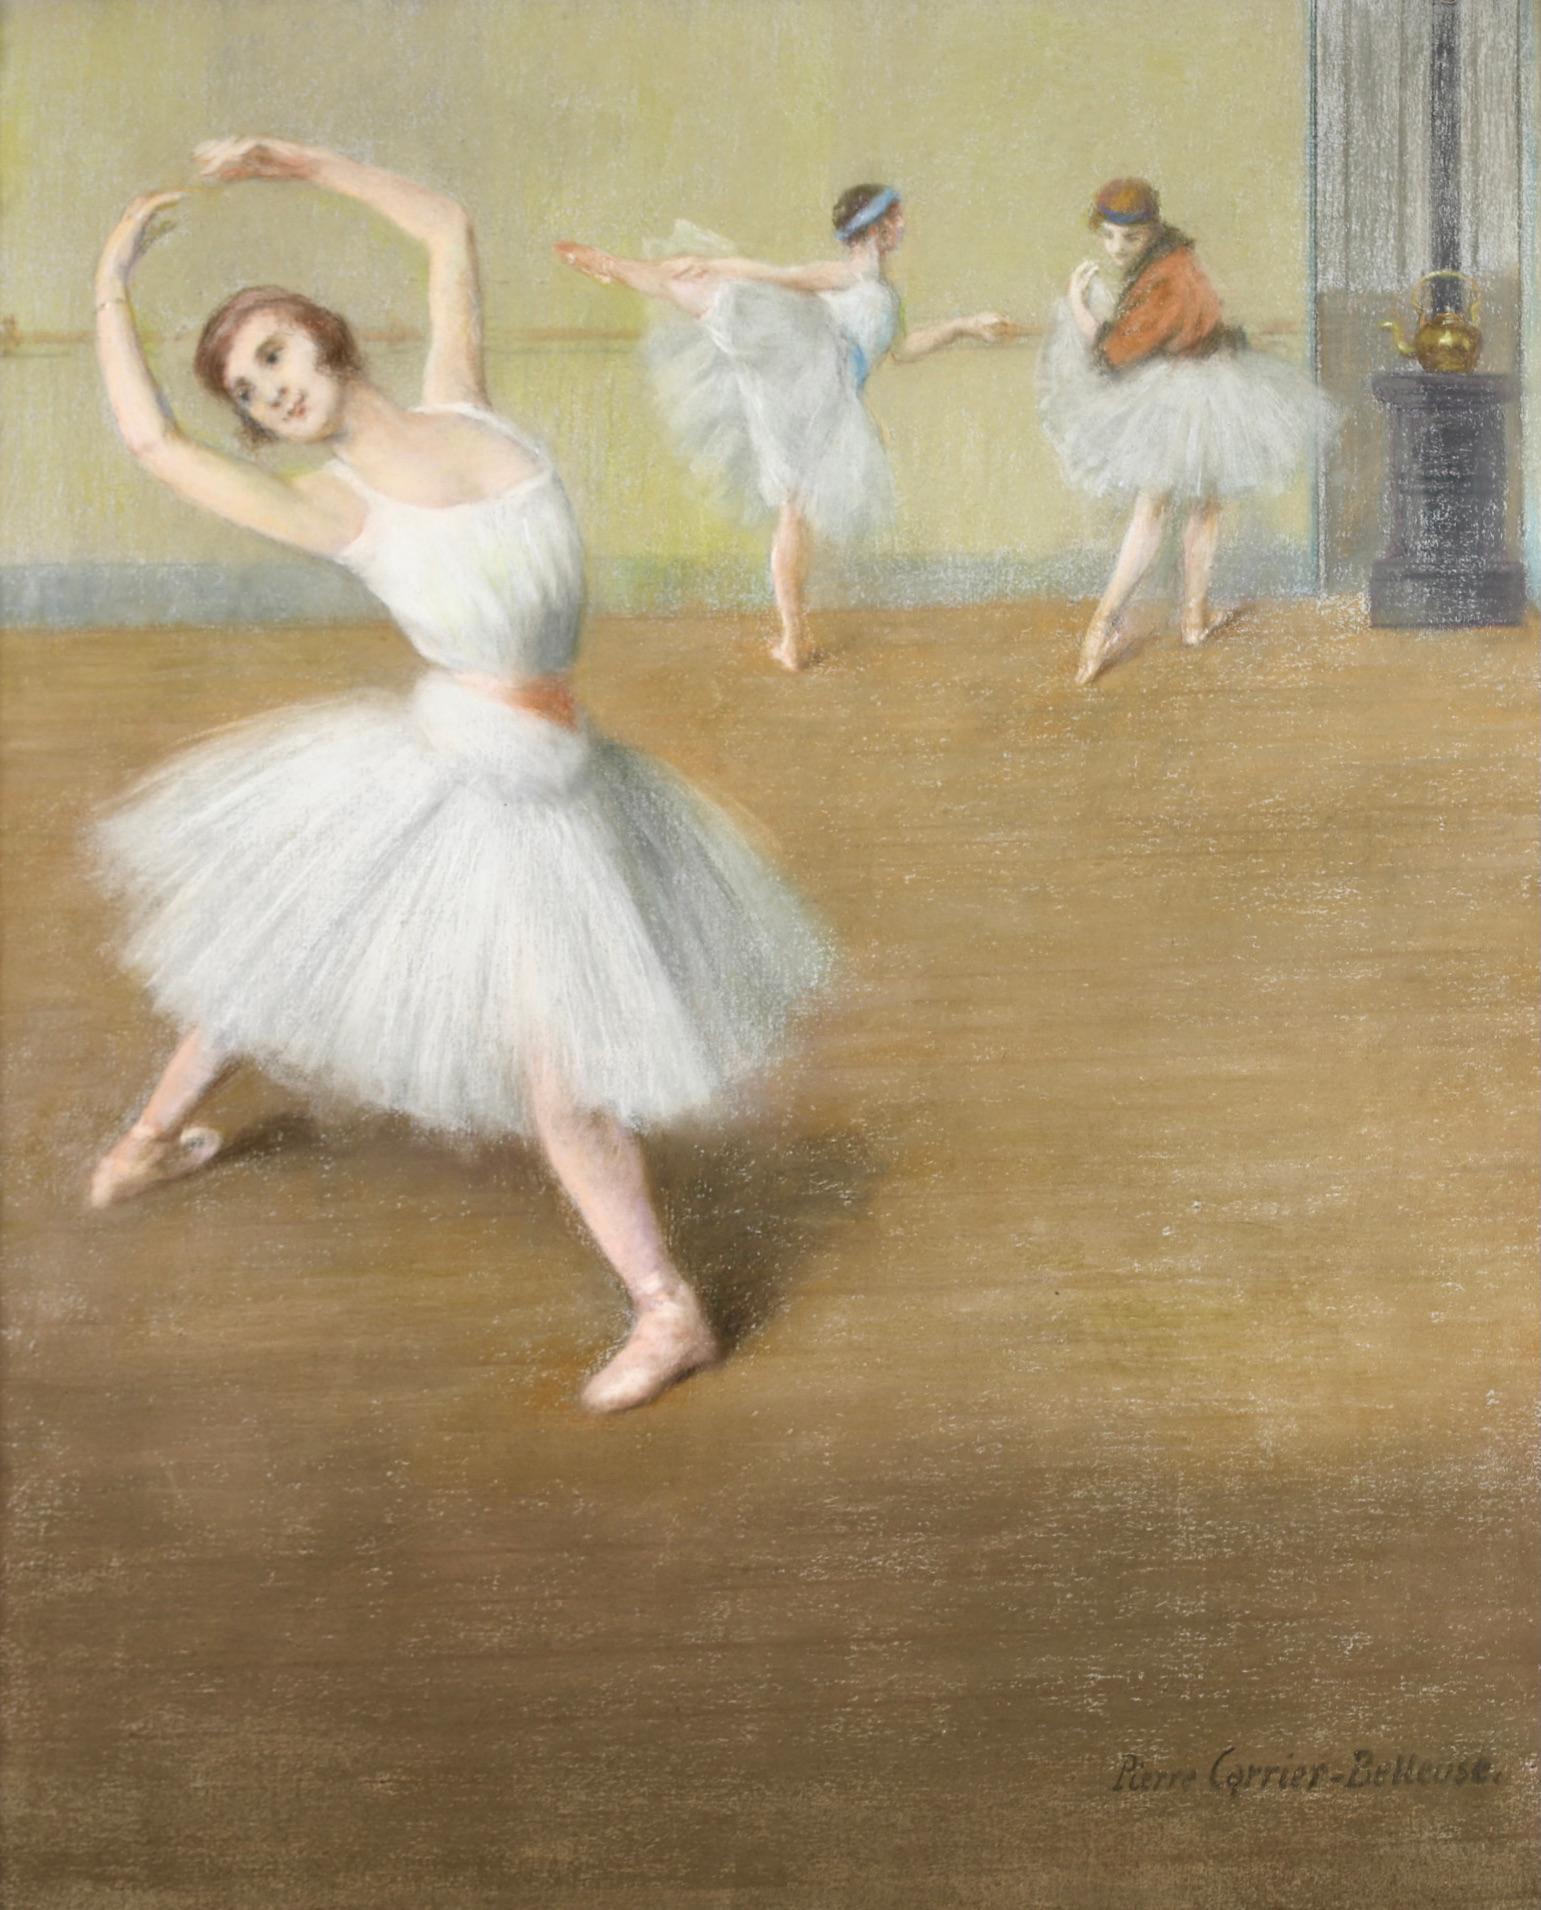 Danseuses a la barre – Impressionistisches figuratives Pastell – Pierre Carrier-Belleuse, Danseuses im Angebot 1